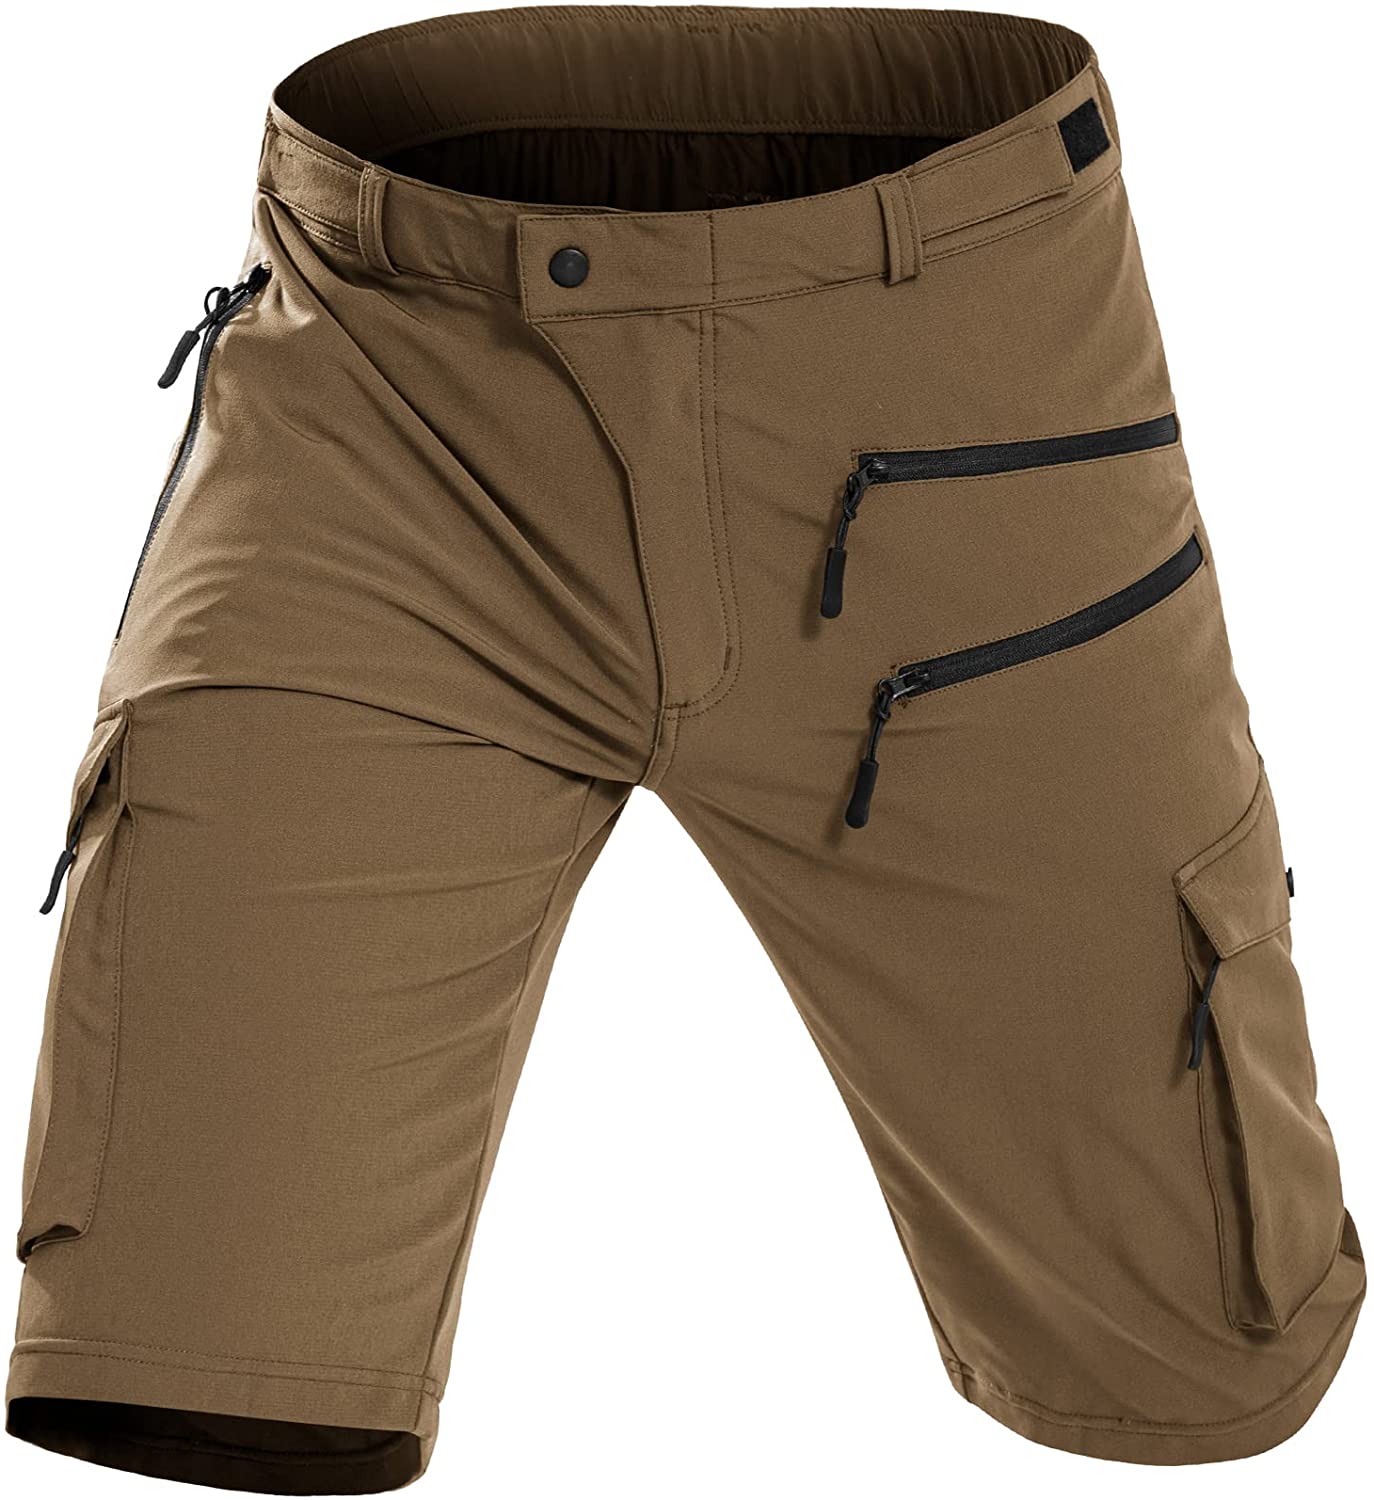 Hiauspor Men's Hiking Cargo Shorts Quick Dry Athletic Shorts with Elastic Waist for Fishing Golf Casual Khaki / Large